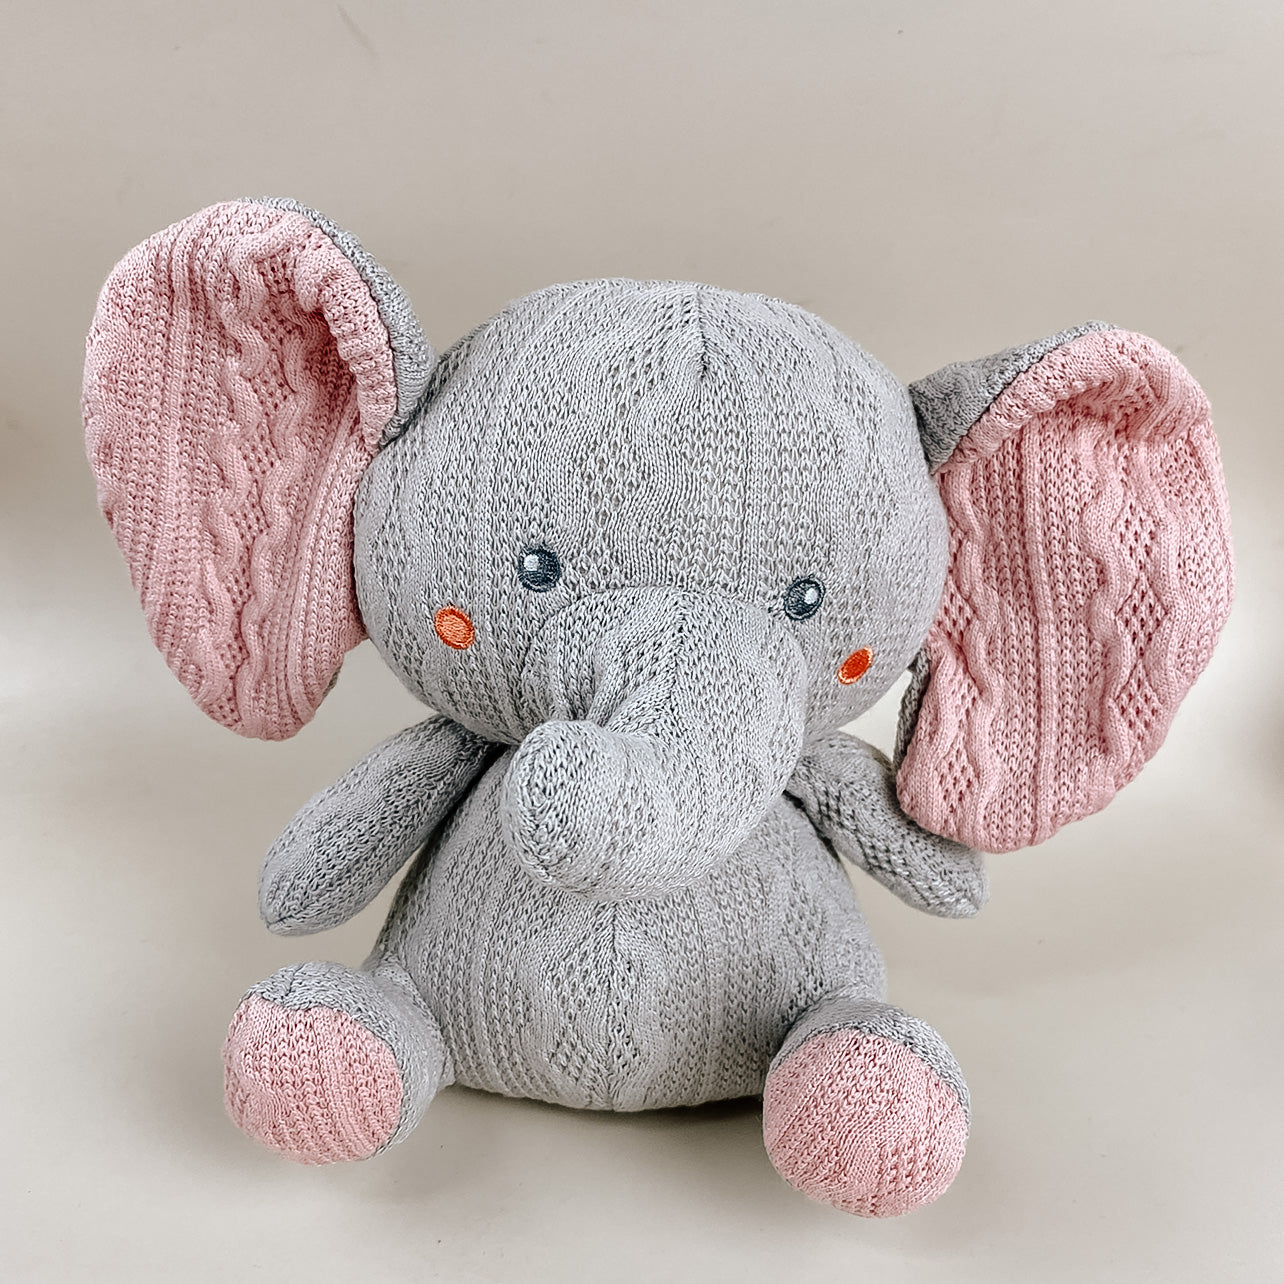 Super Soft Knitted Animal Plush Stuffed Toy